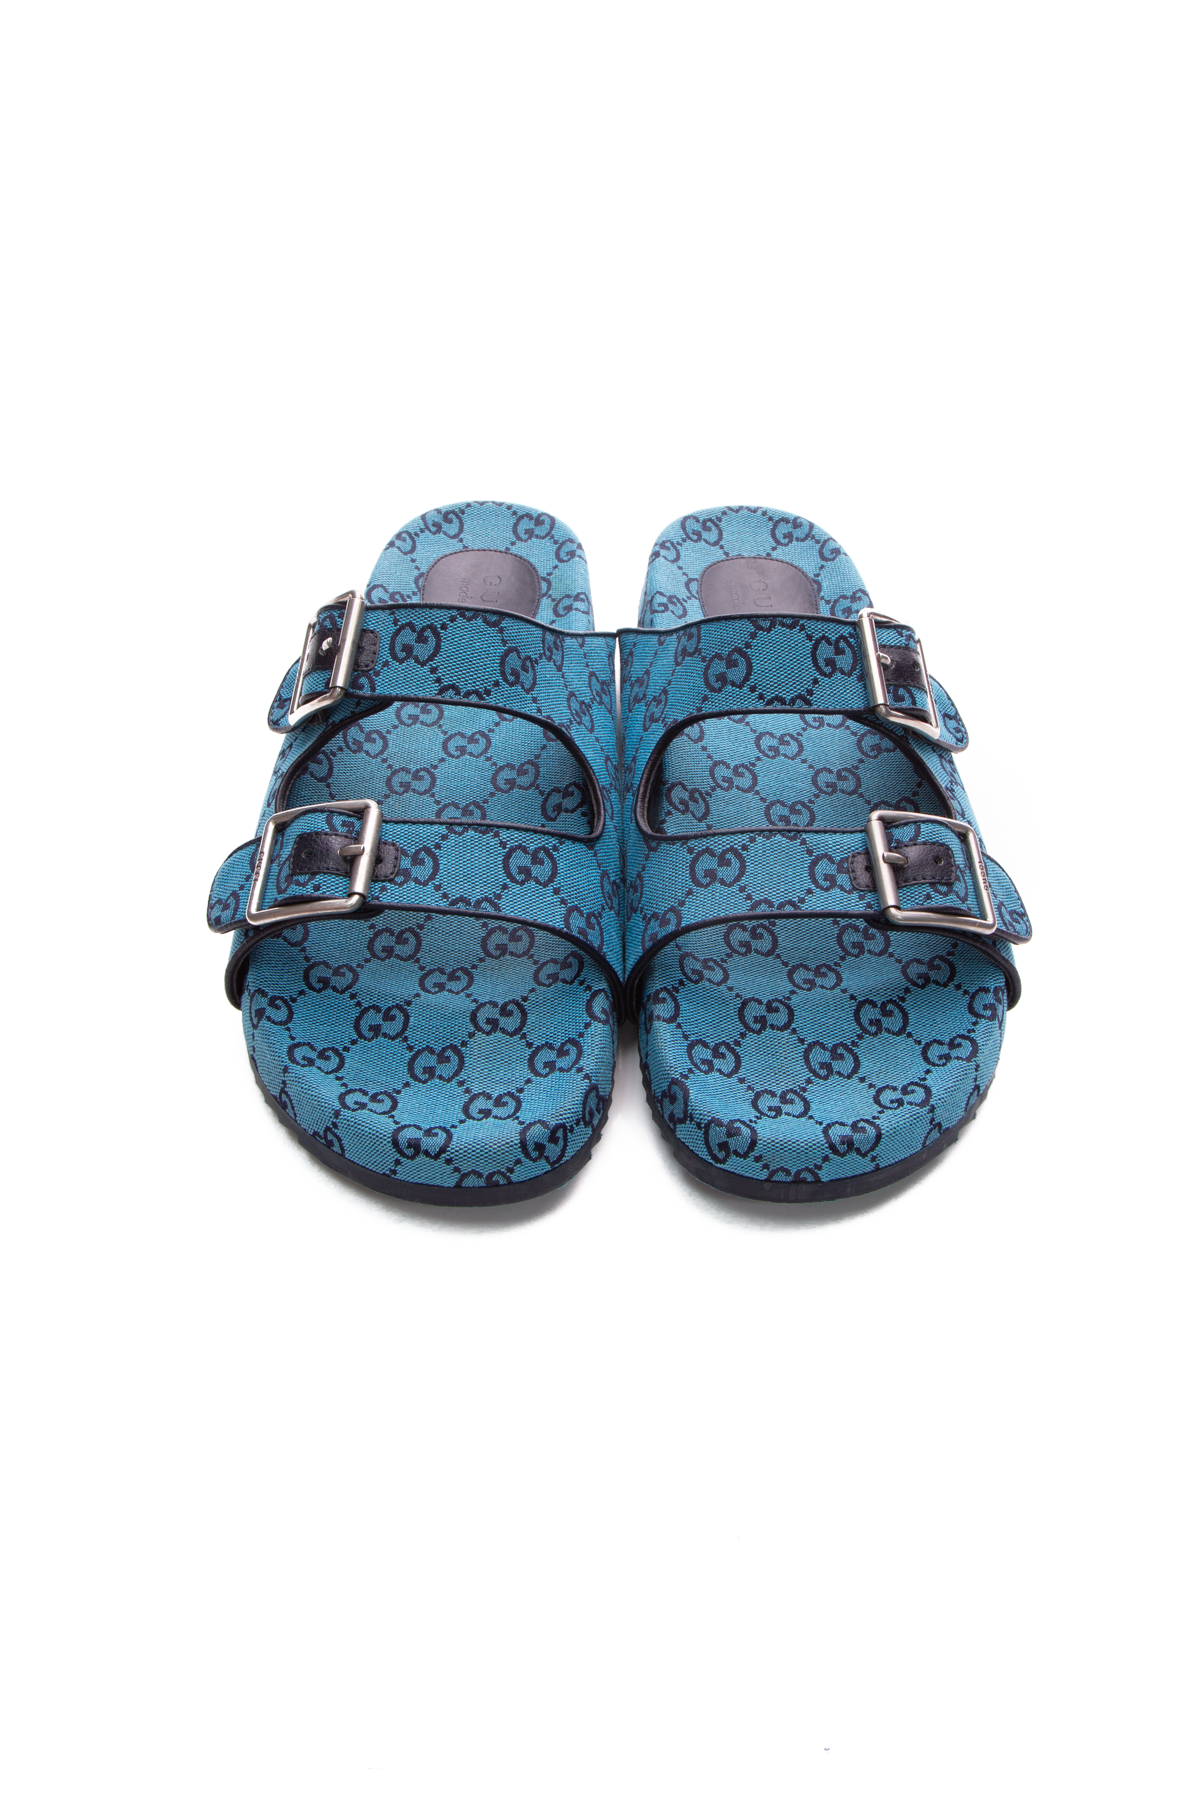 Gucci Mens Buckle Sandals